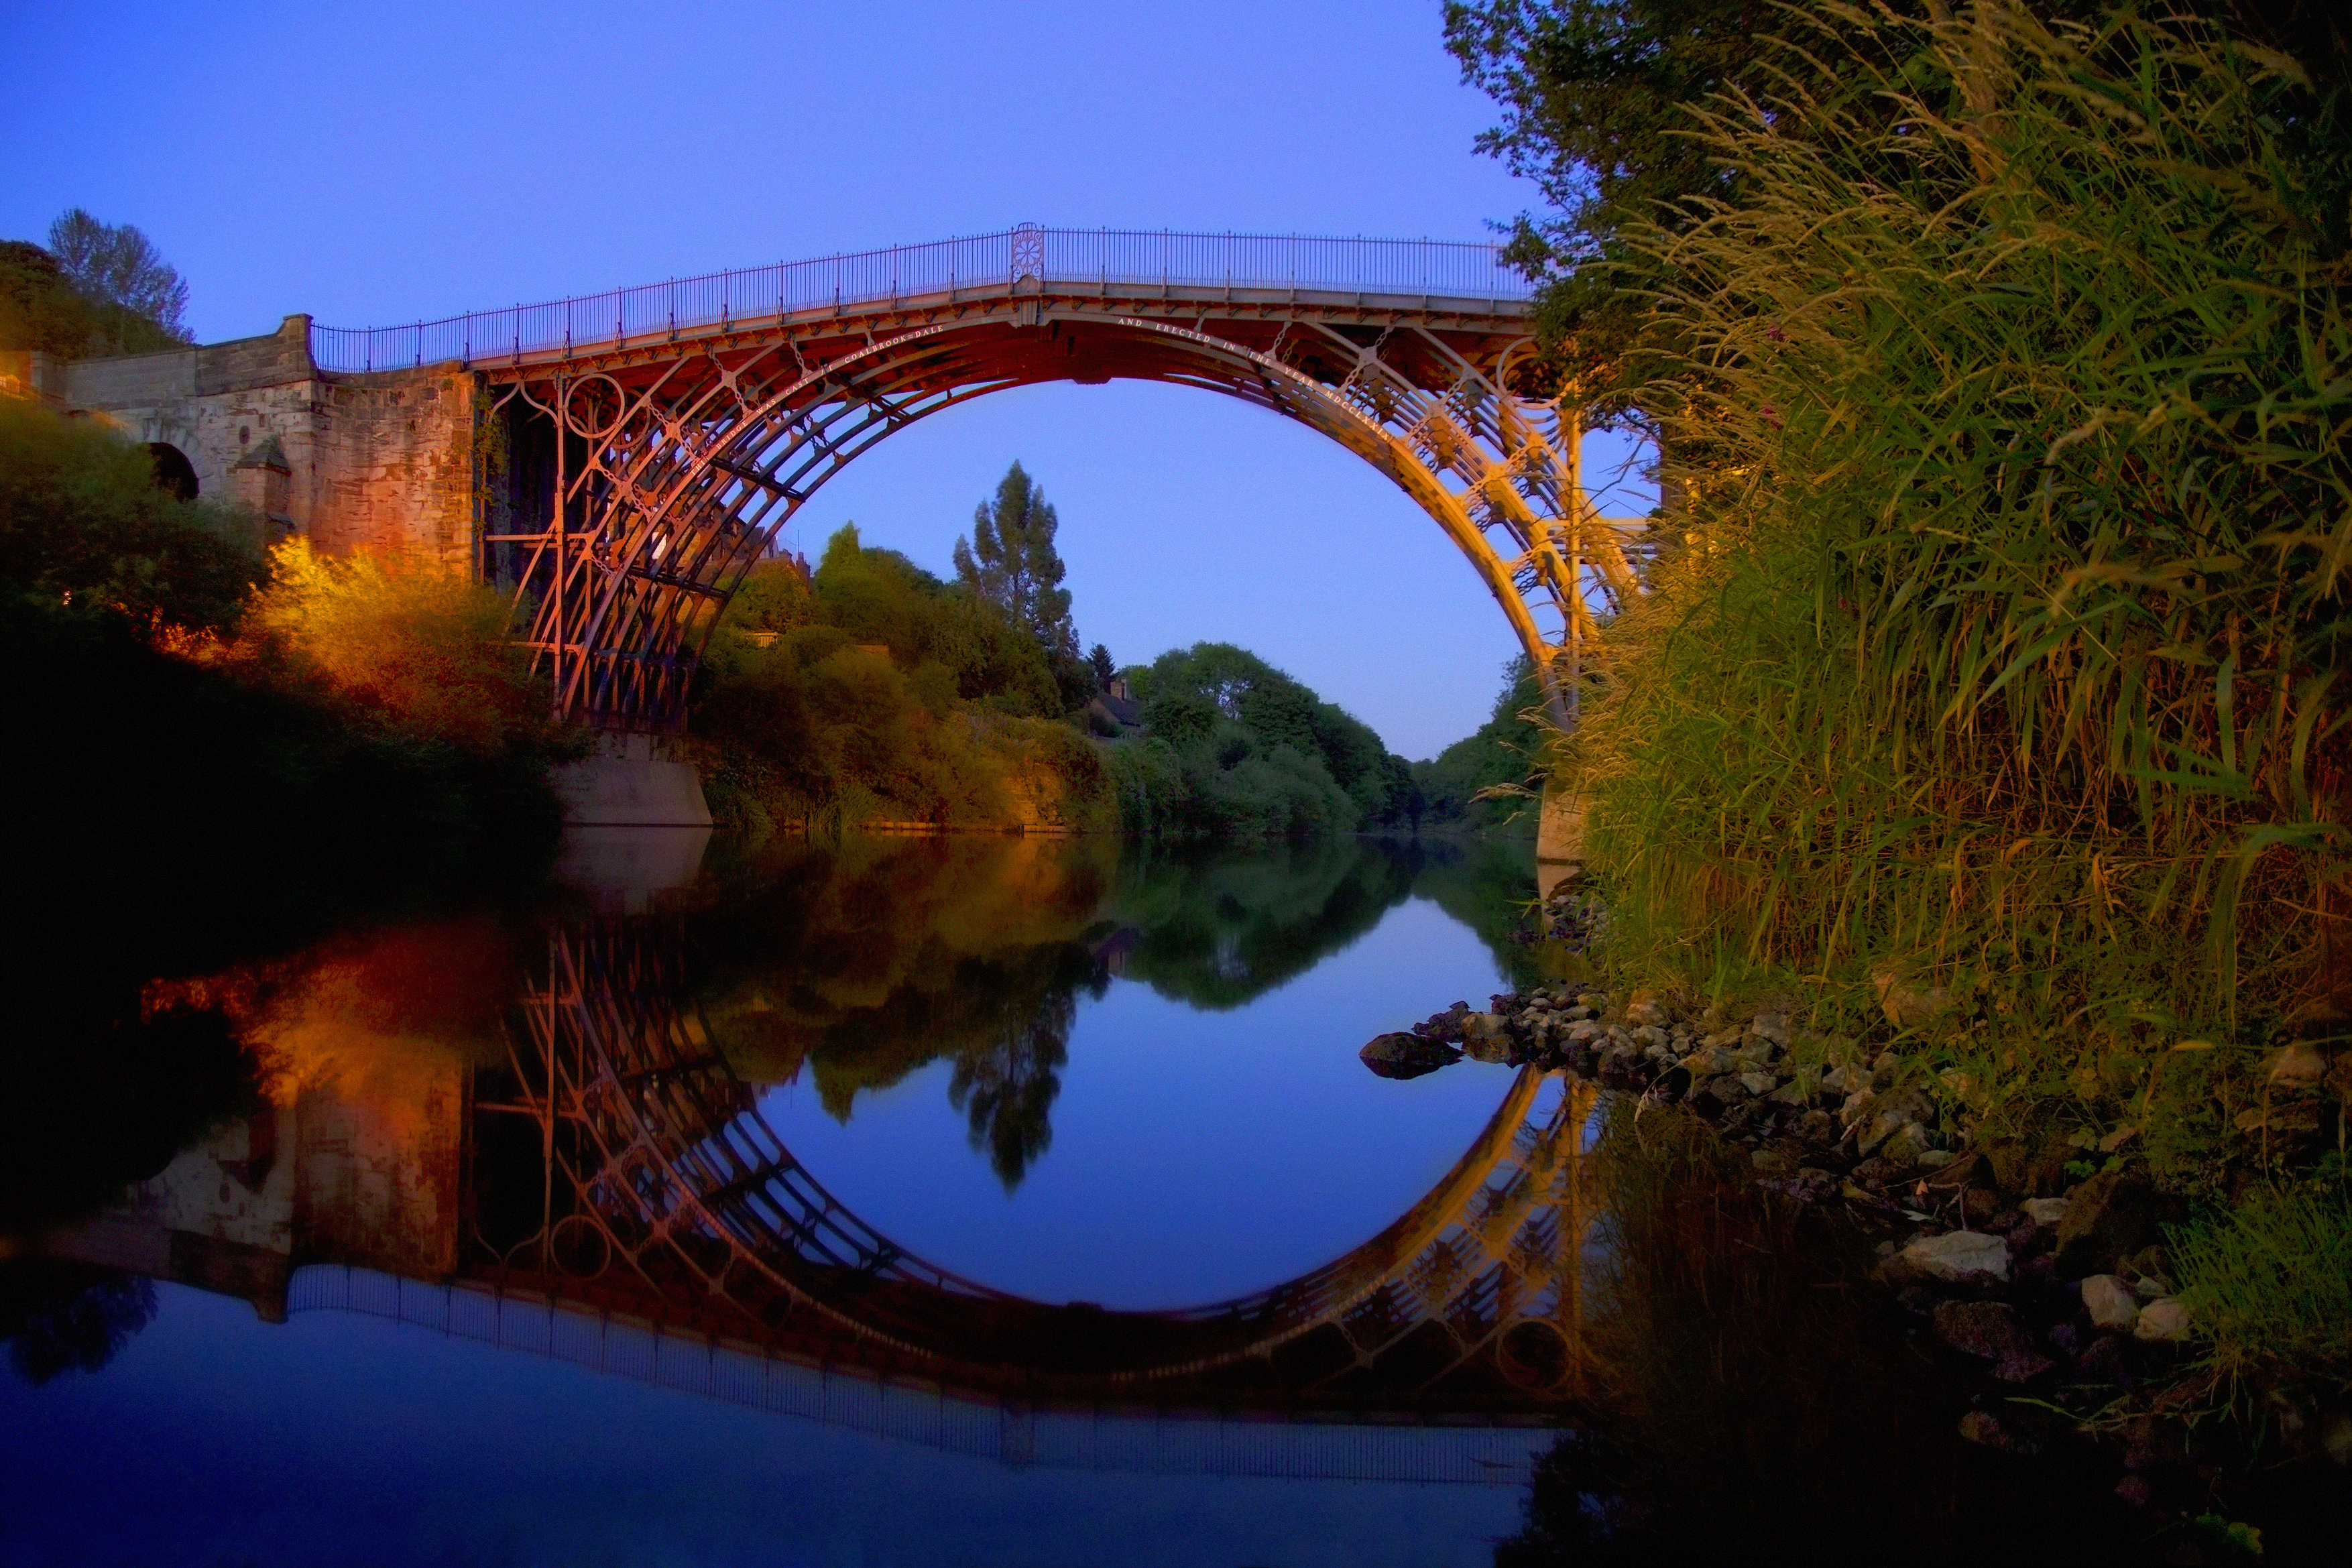 First bridge. Ущелье Айрон-бридж. Мост Айрон бридж. Чугунный мост через Северн, Англия. Ущелье Айрон бридж ЮНЕСКО.